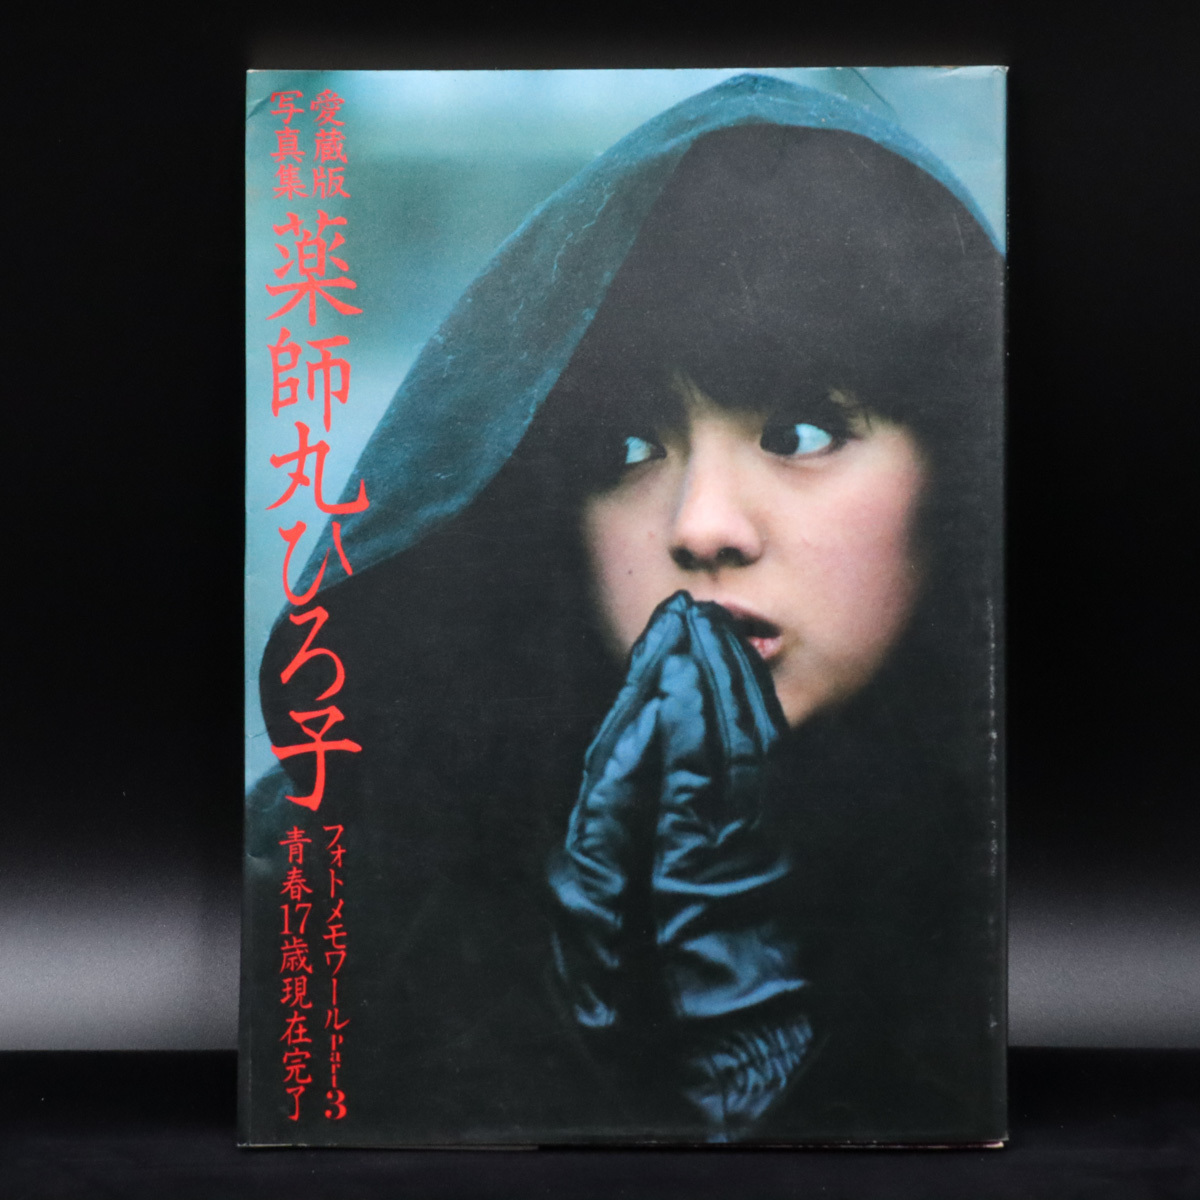 [.] Yakushimaru Hiroko HIROKO YAKUSHIMARU[ photo memory wa-ruPart3] collector's edition photoalbum 5JI01.l.10.5.B